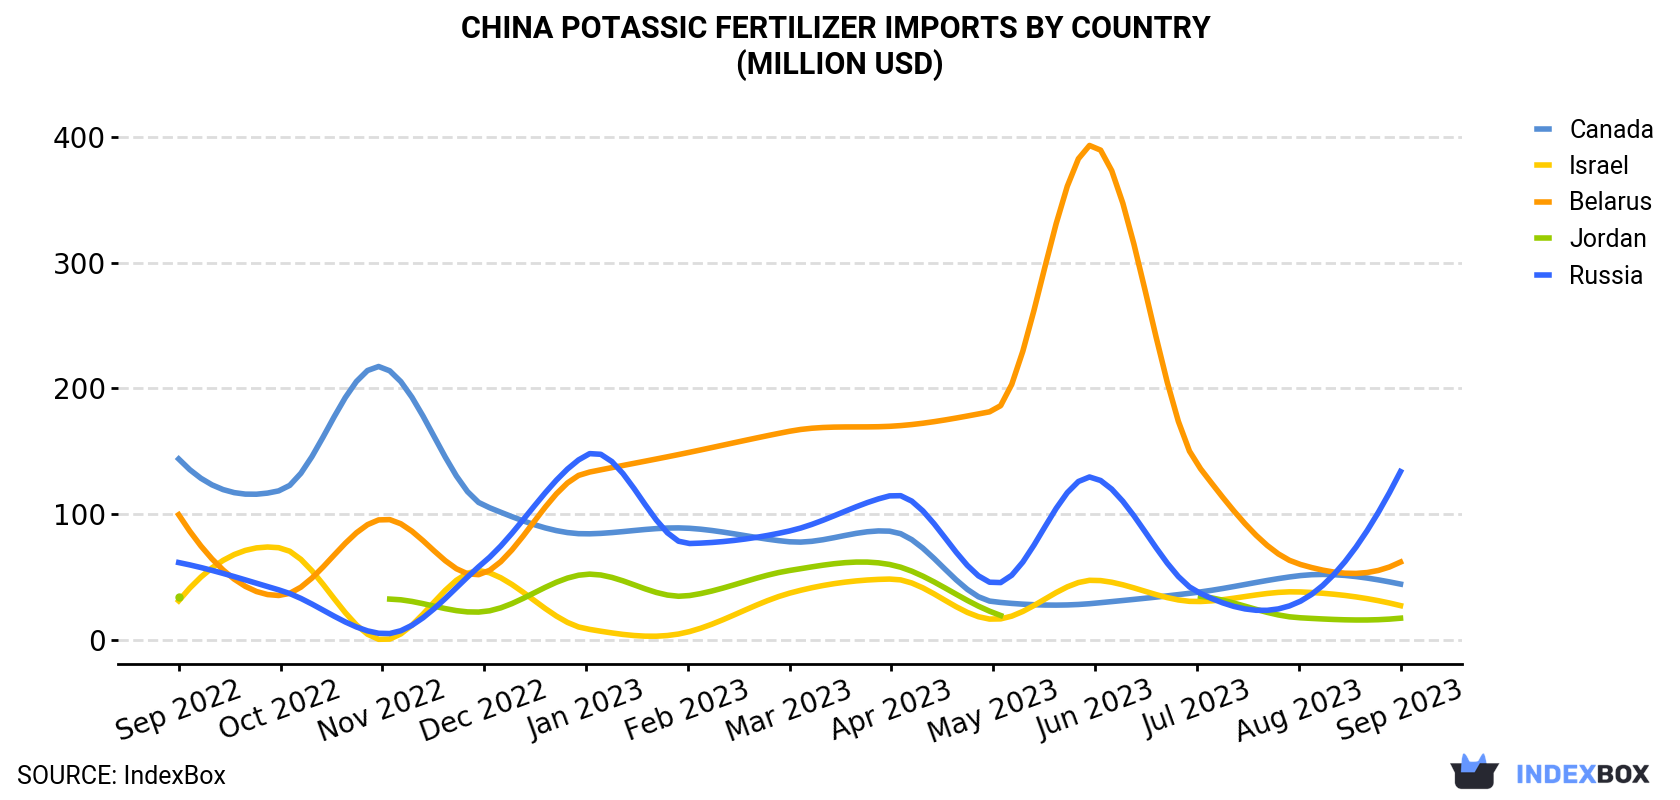 China Potassic Fertilizer Imports By Country (Million USD)